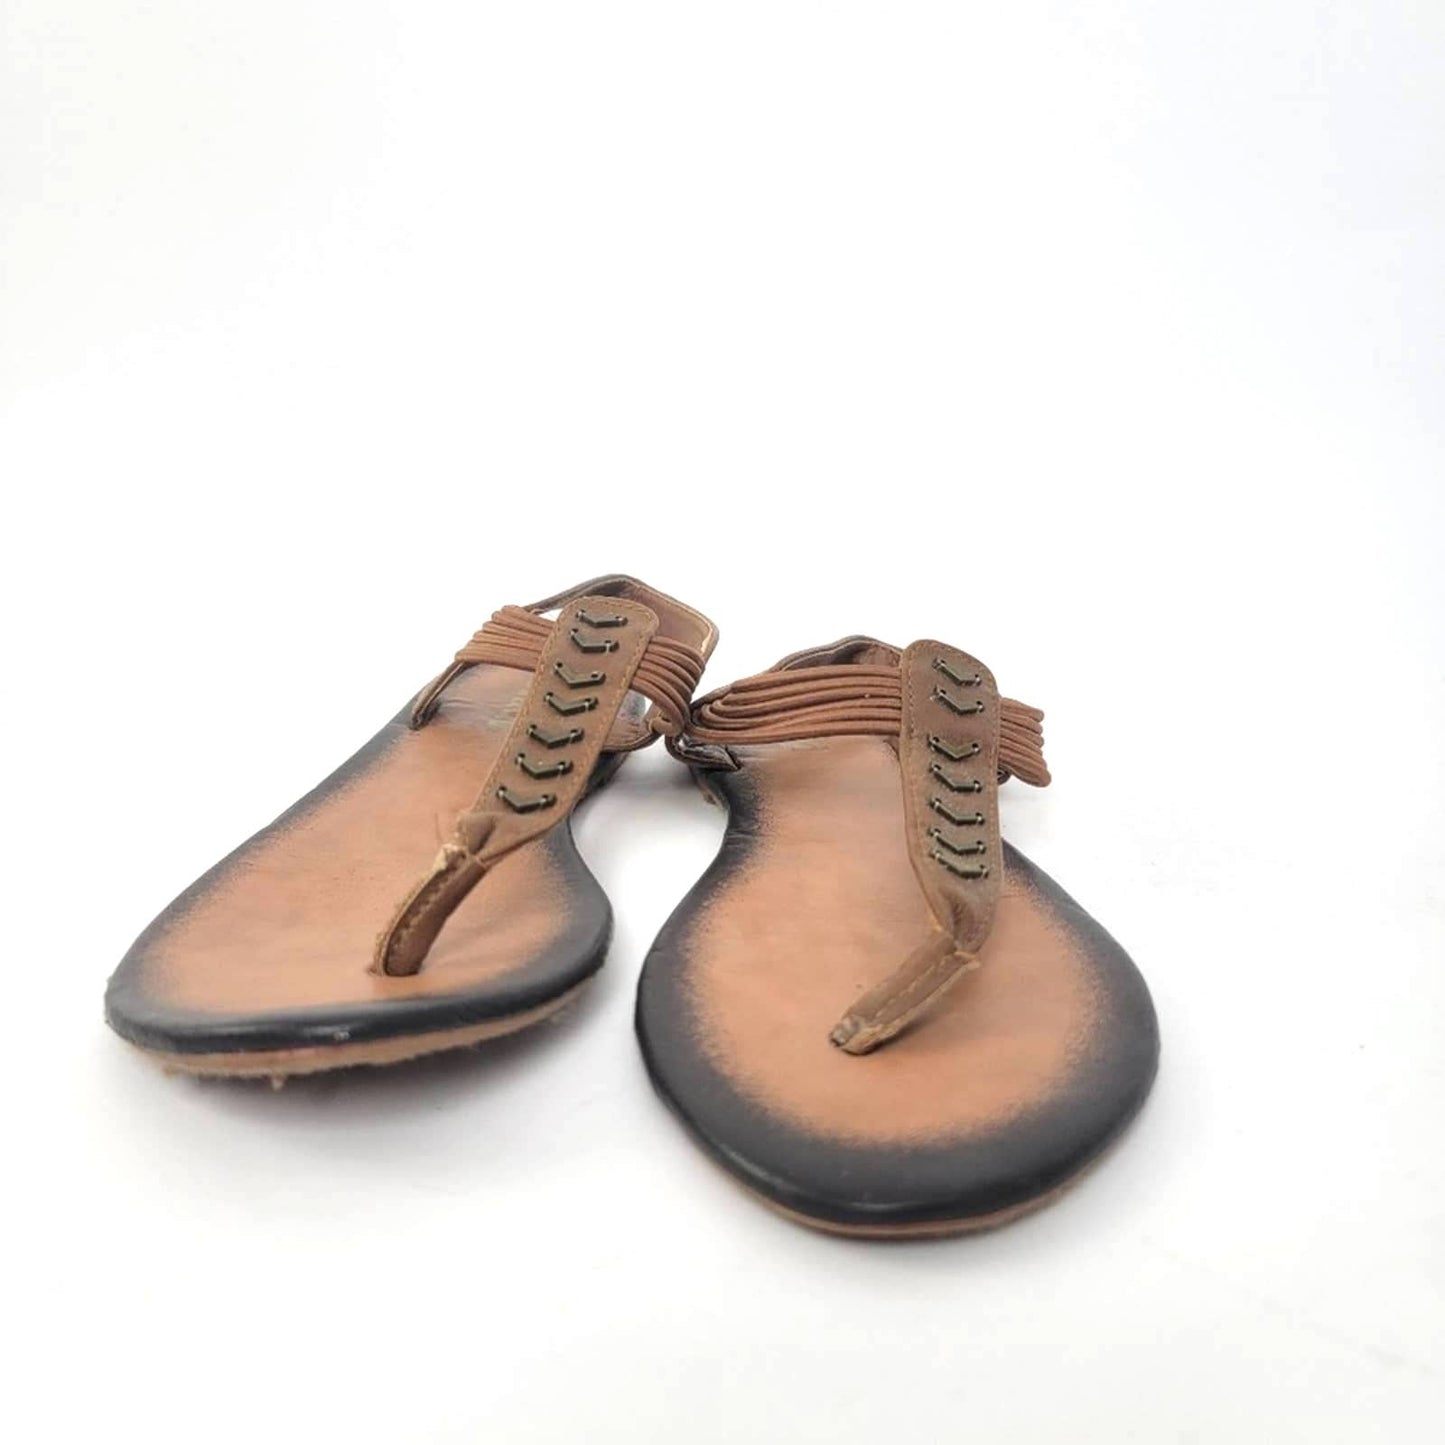 Mudd T-Strap Women's Thong Sandals - 7